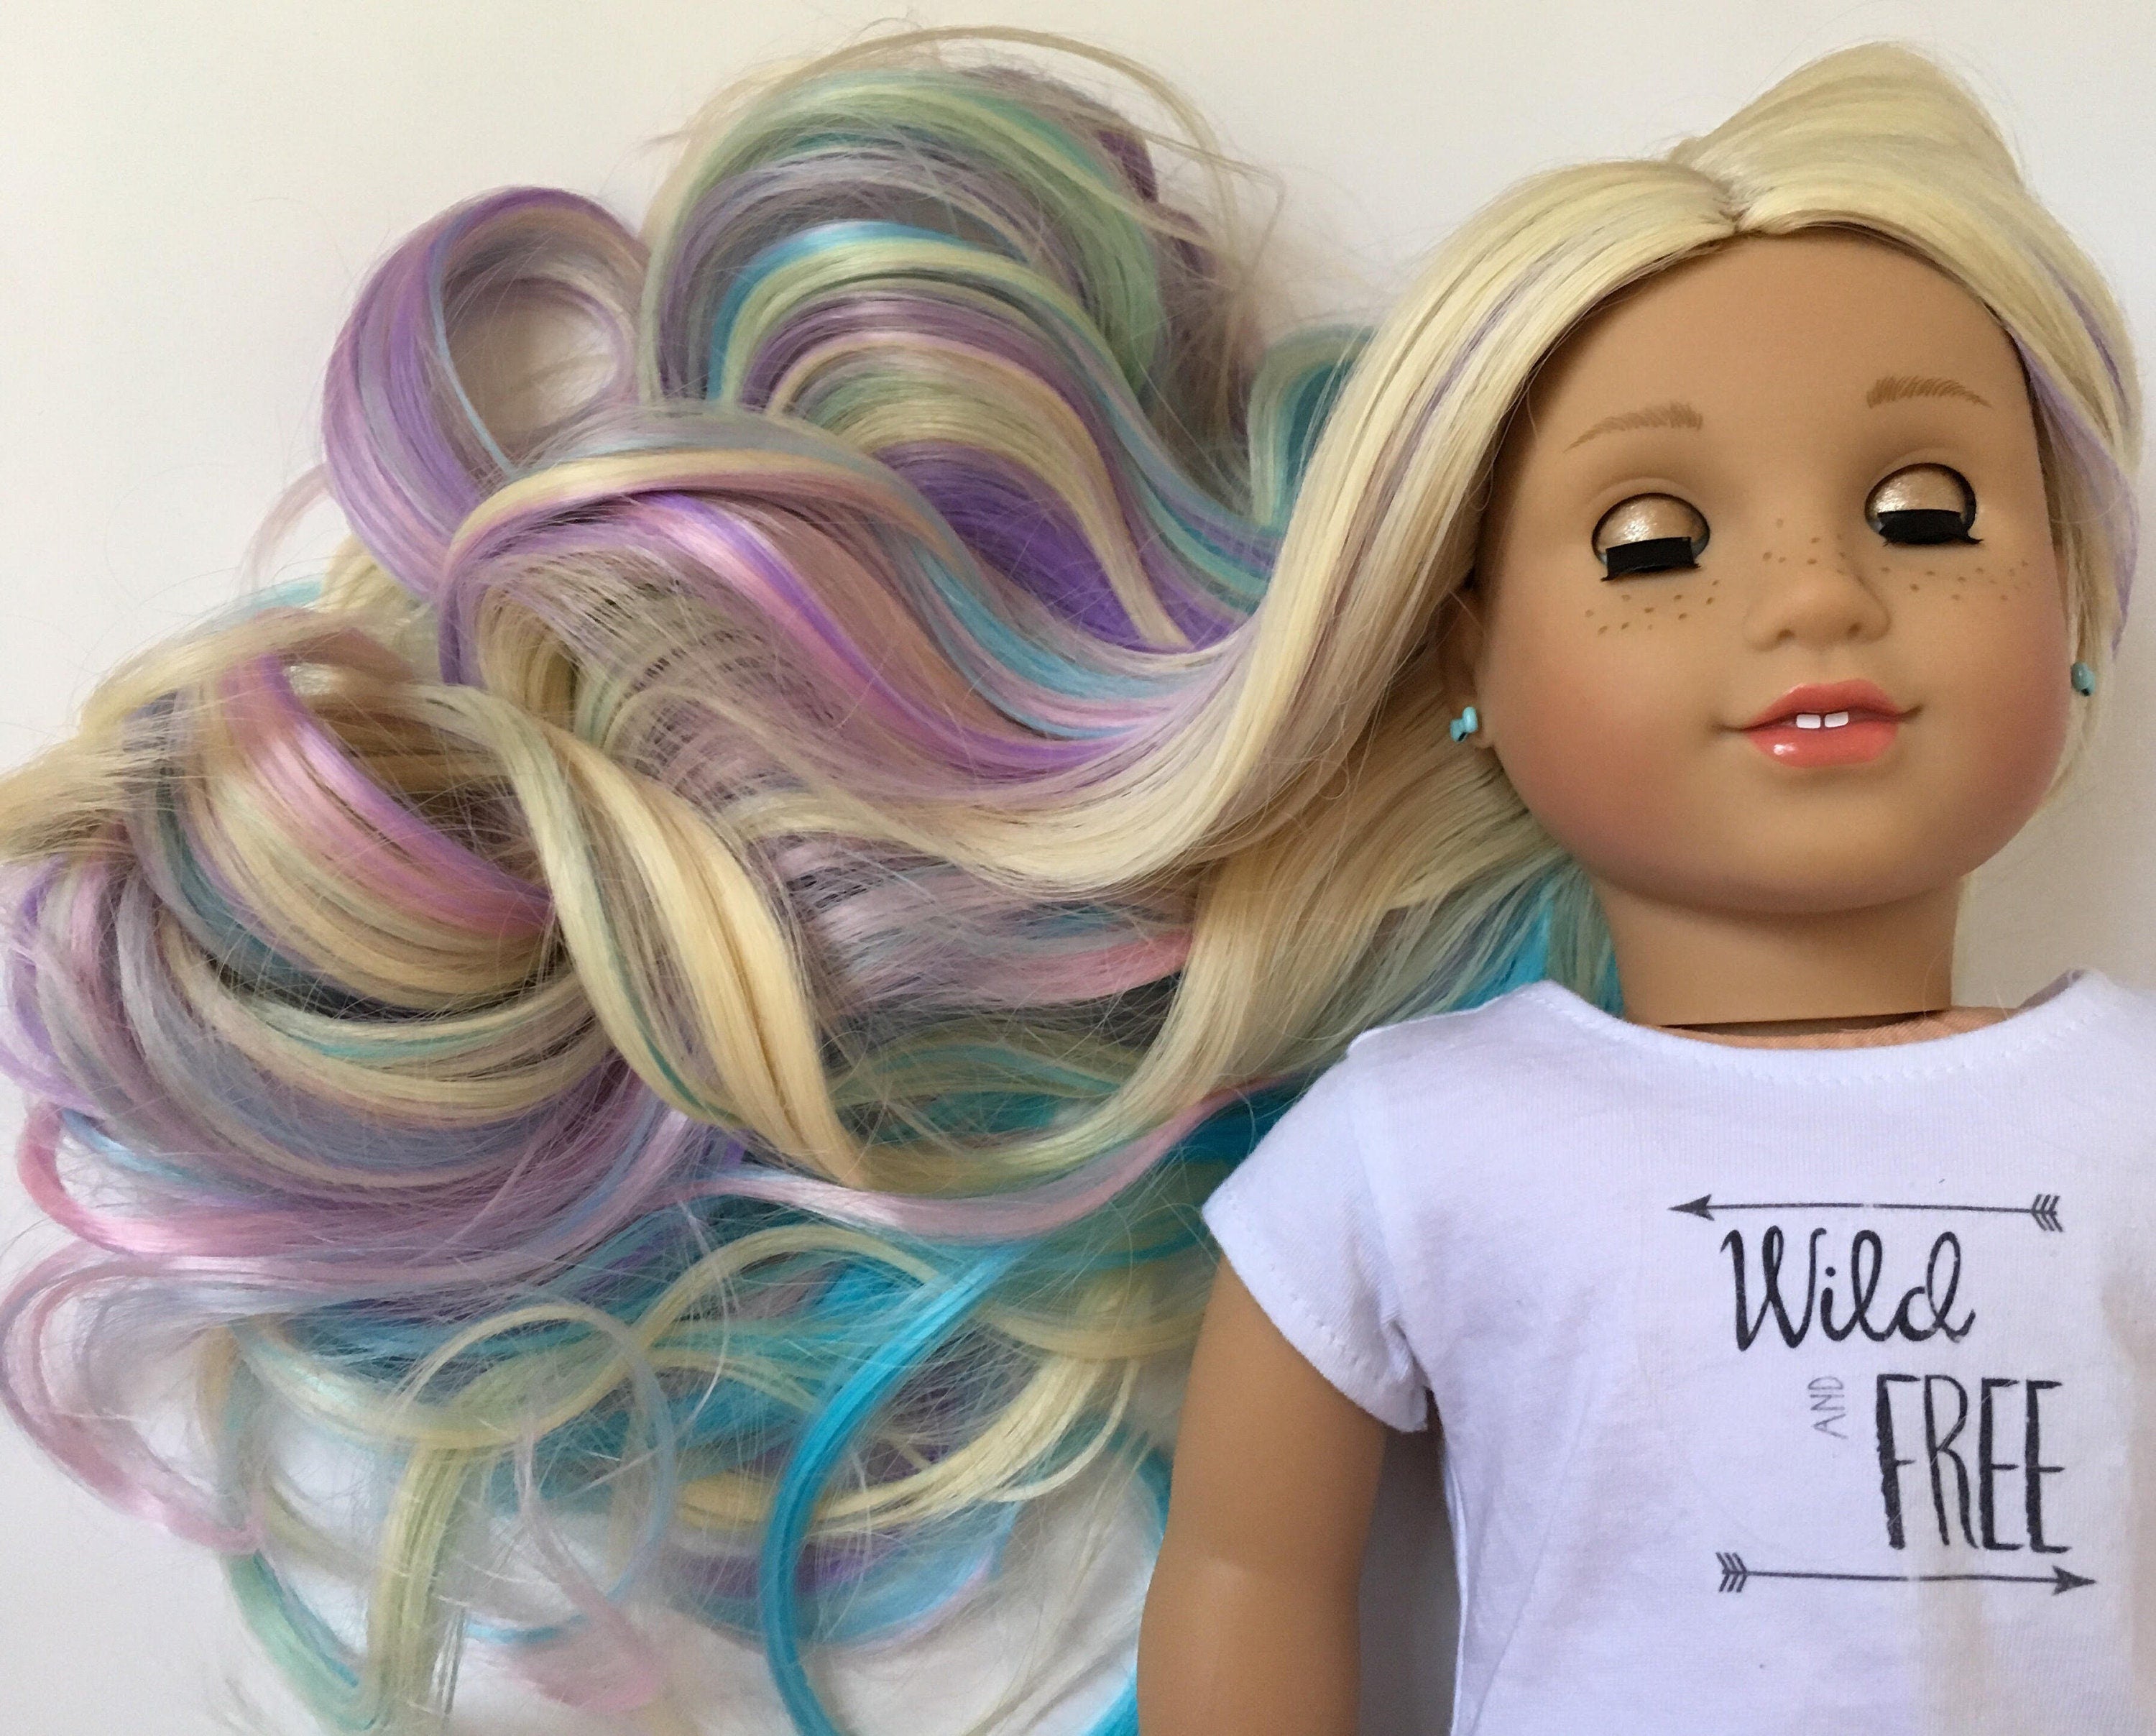 Custom Doll Wig for 18" American Girl Doll - Heat Safe-Tangle Resistant-fits 10-11" Unicorn Rainbow Descendants Audrey